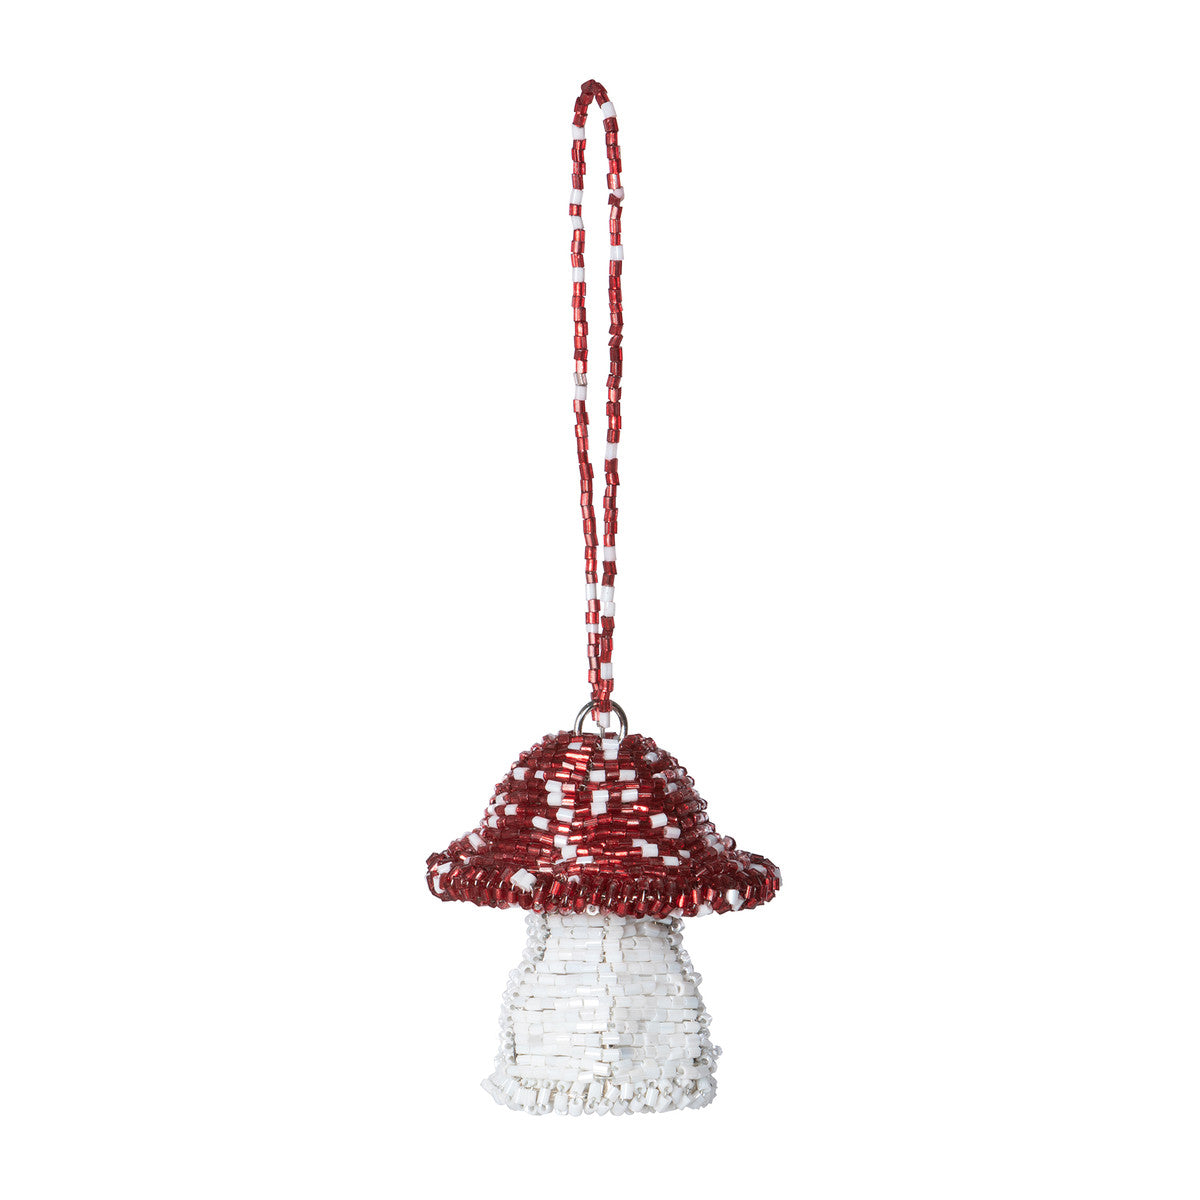 Beaded Red Capped Mushroom Ornament